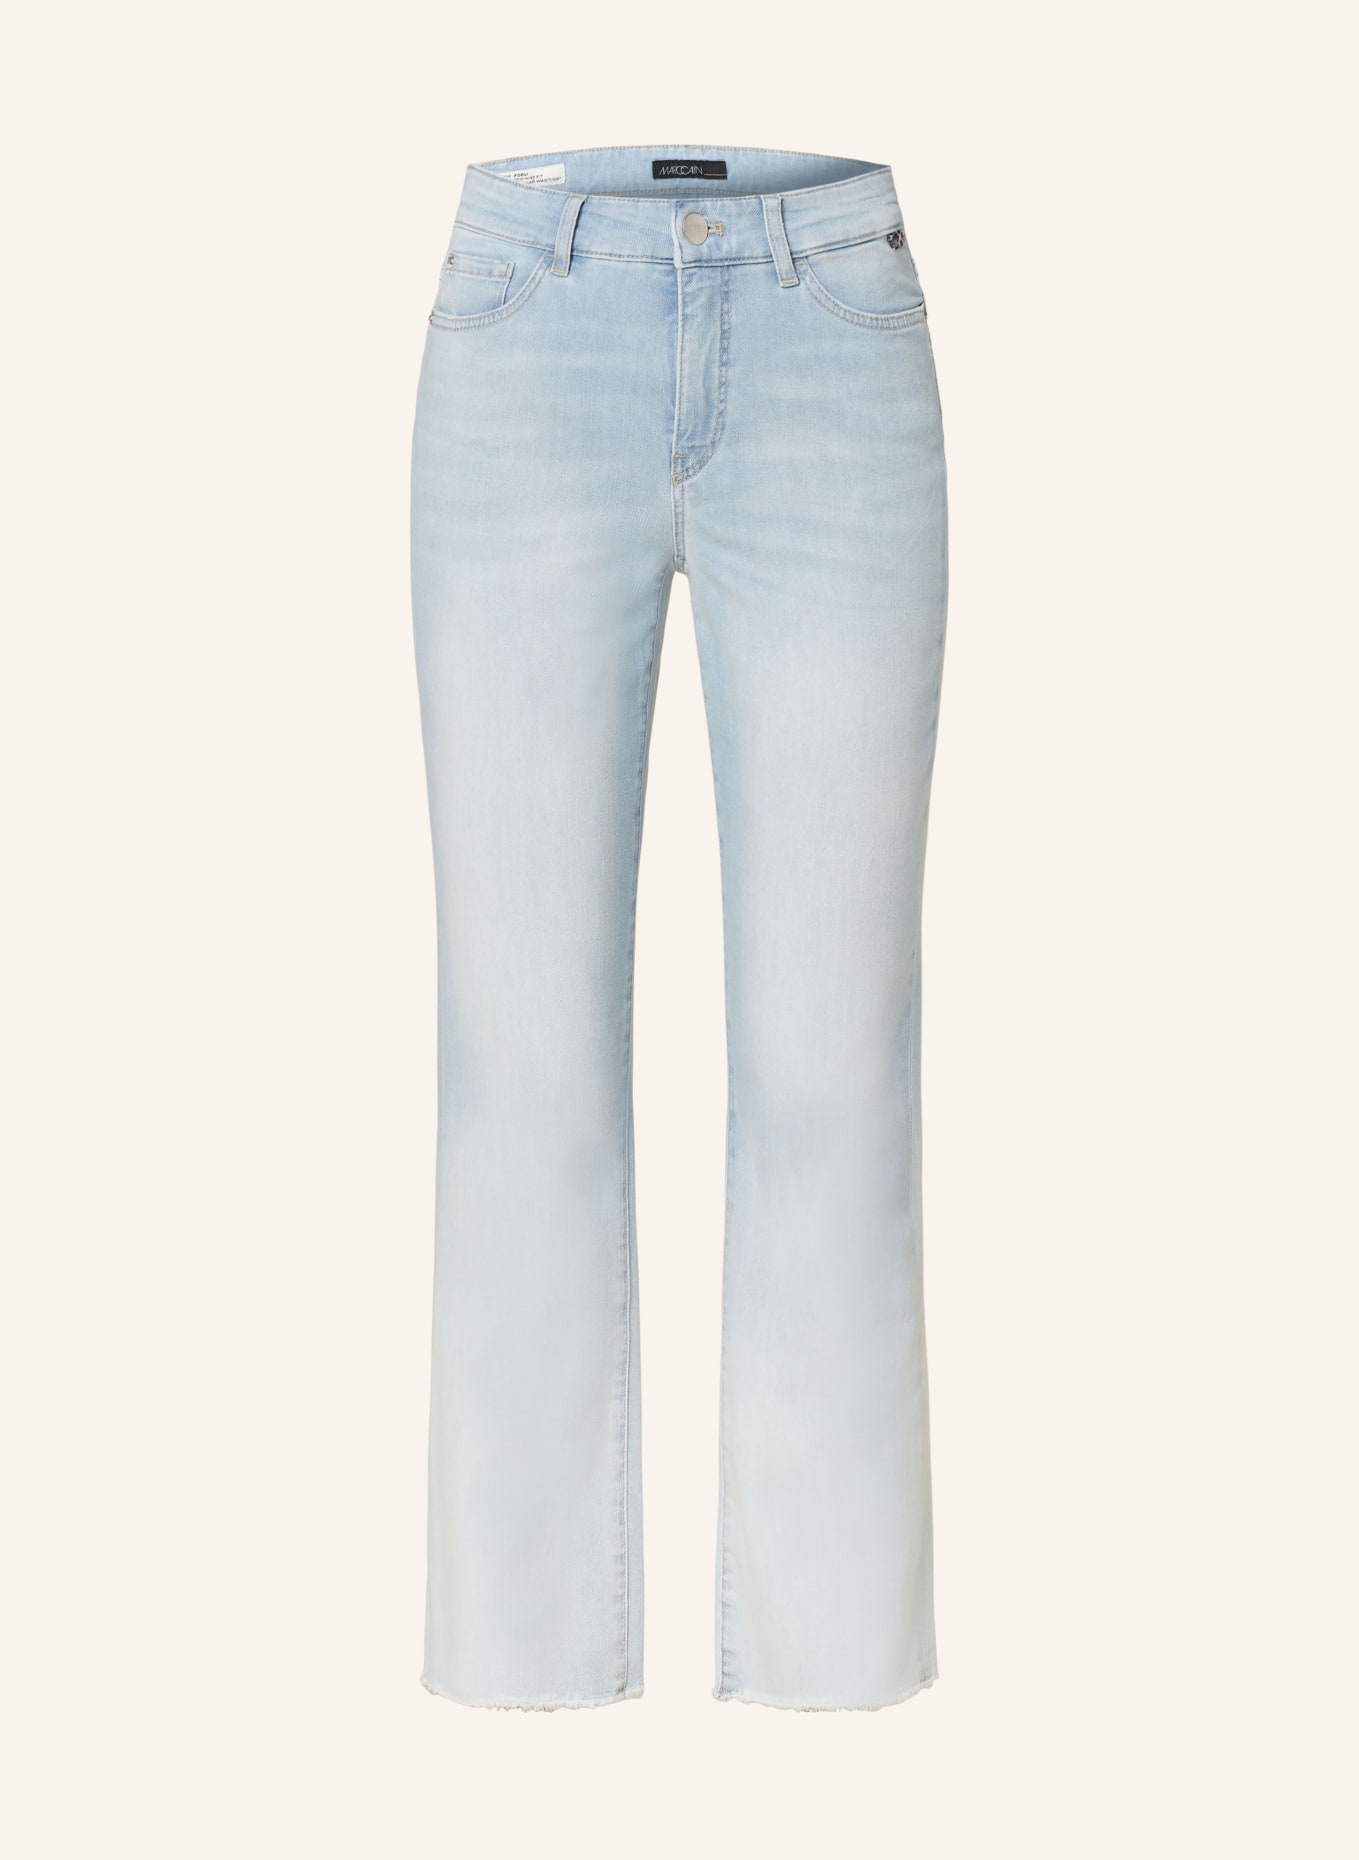 MARC CAIN 7/8-Jeans FORLI, Farbe: 350 light denim (Bild 1)